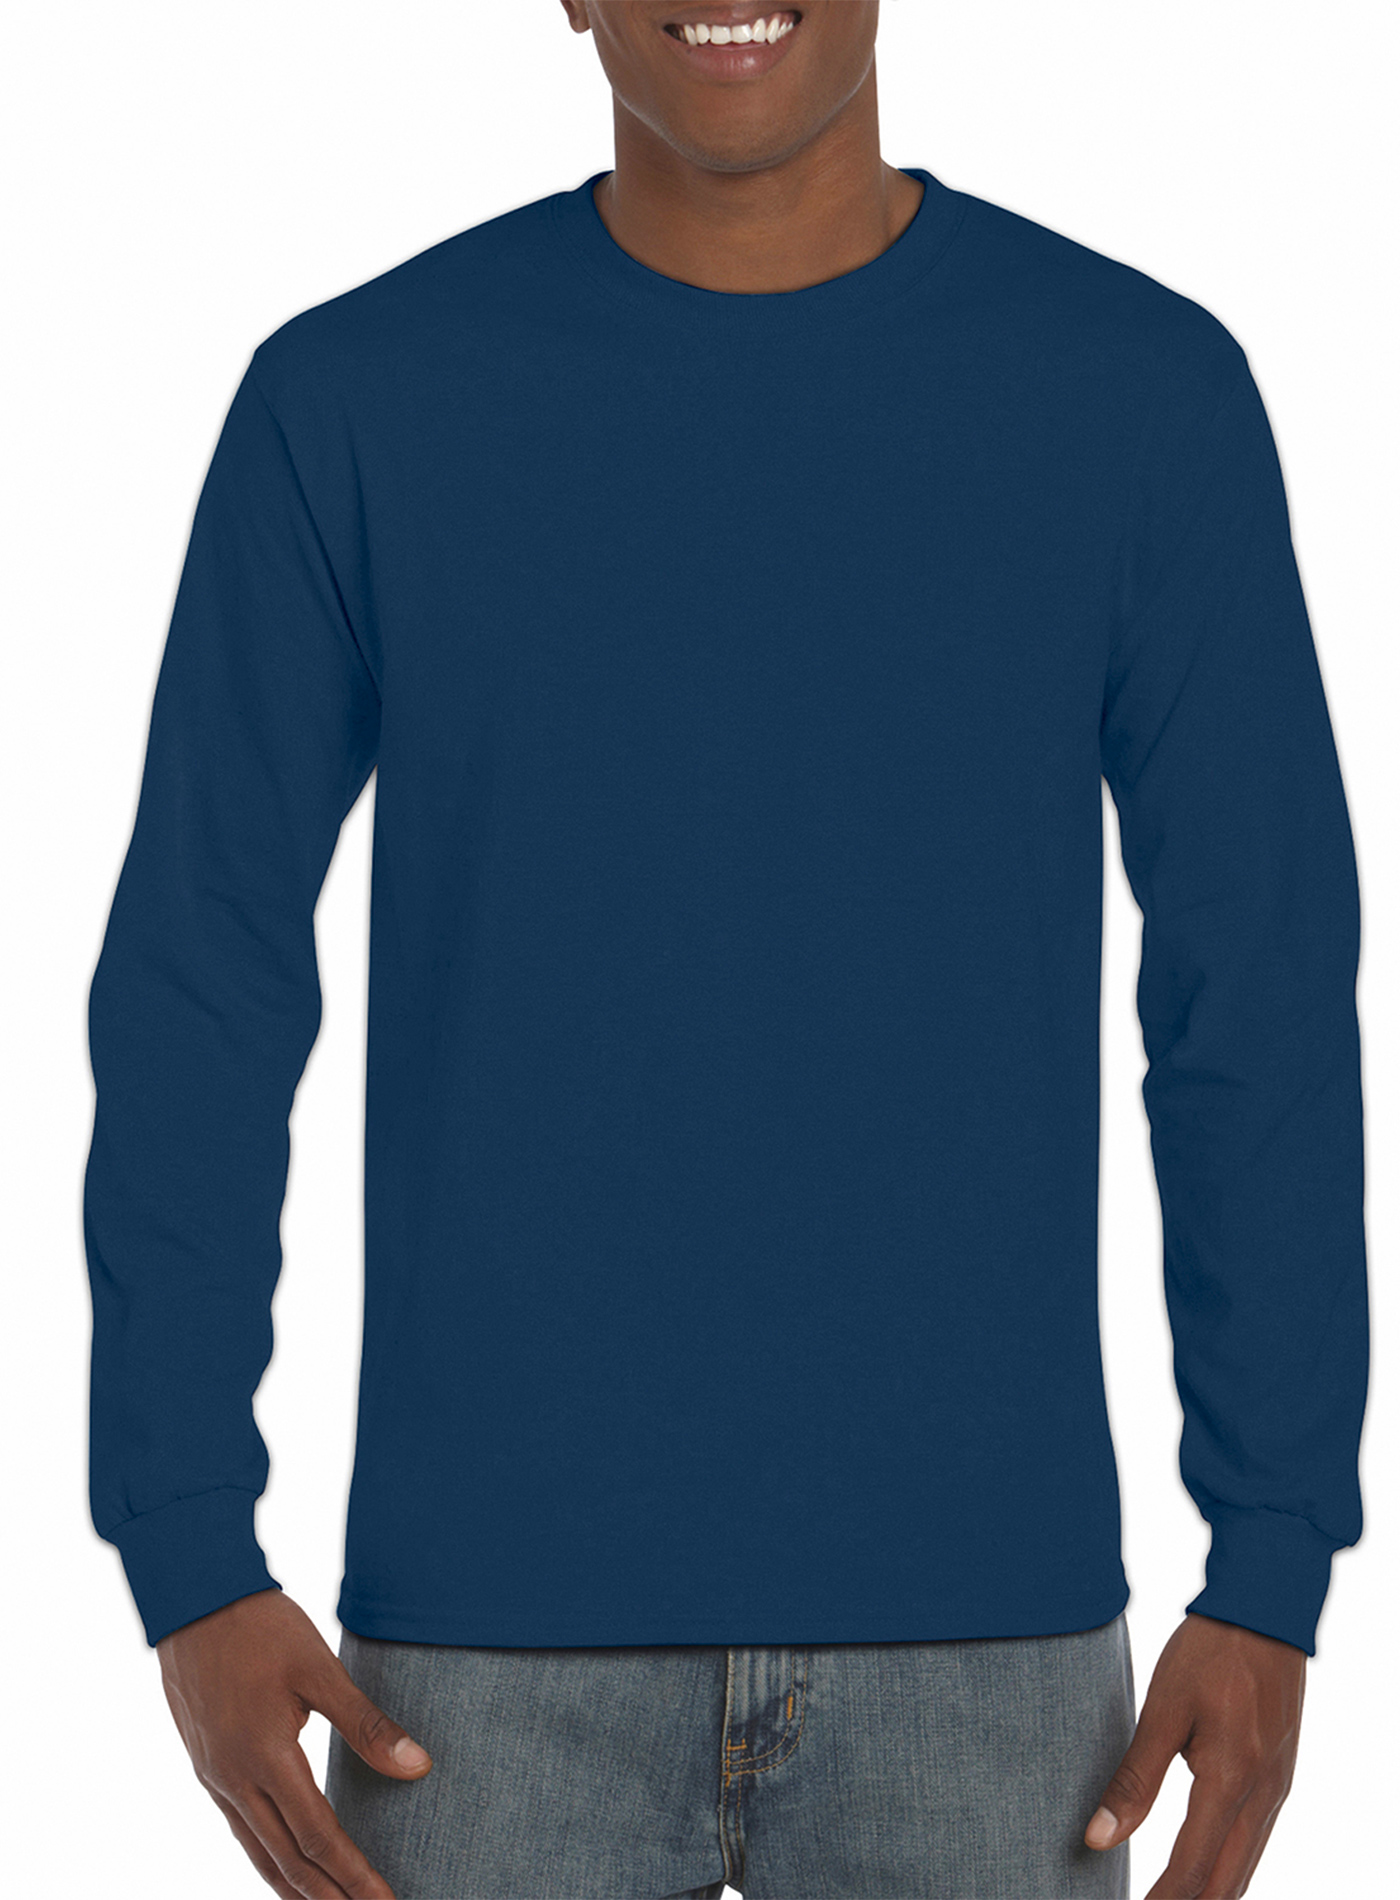 Pánské tričko s dlouhým rukávem Gildan Hammer - Temně modrá XL